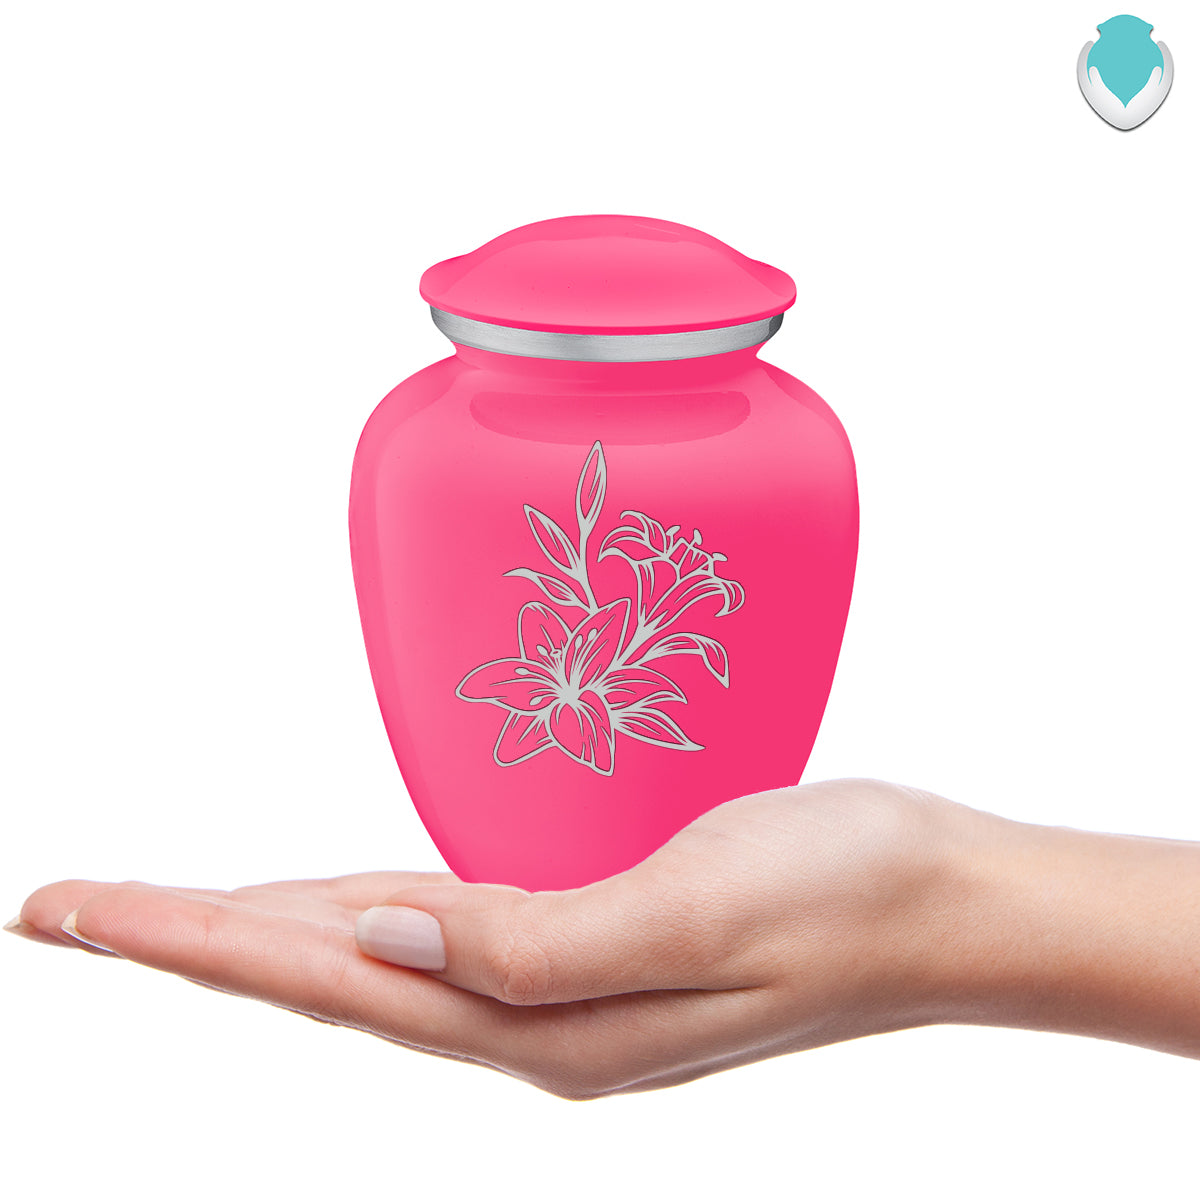 Medium Embrace Bright Pink Lily Cremation Urn